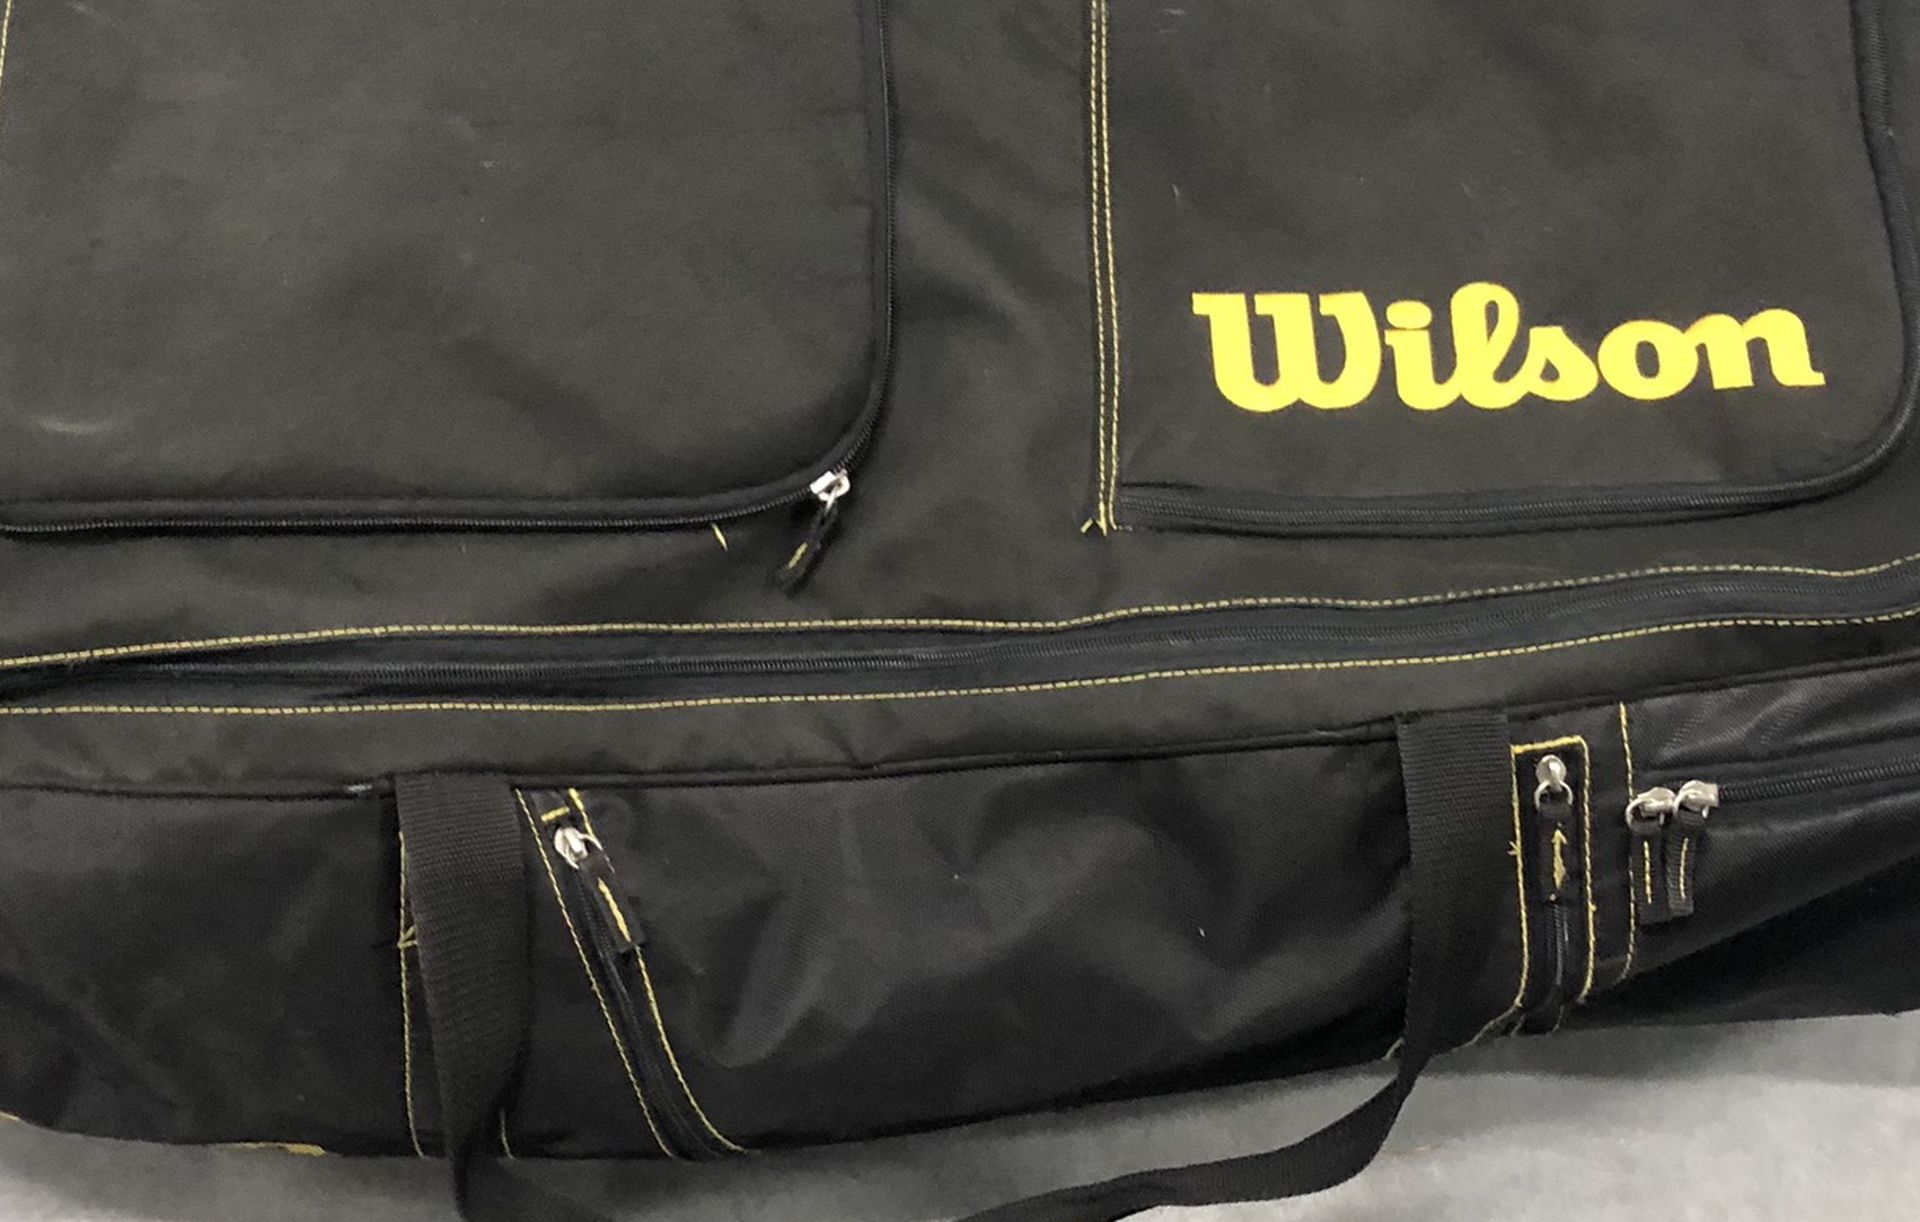 Wilson Wheeled Bat Bag & Equipment Roller Bag